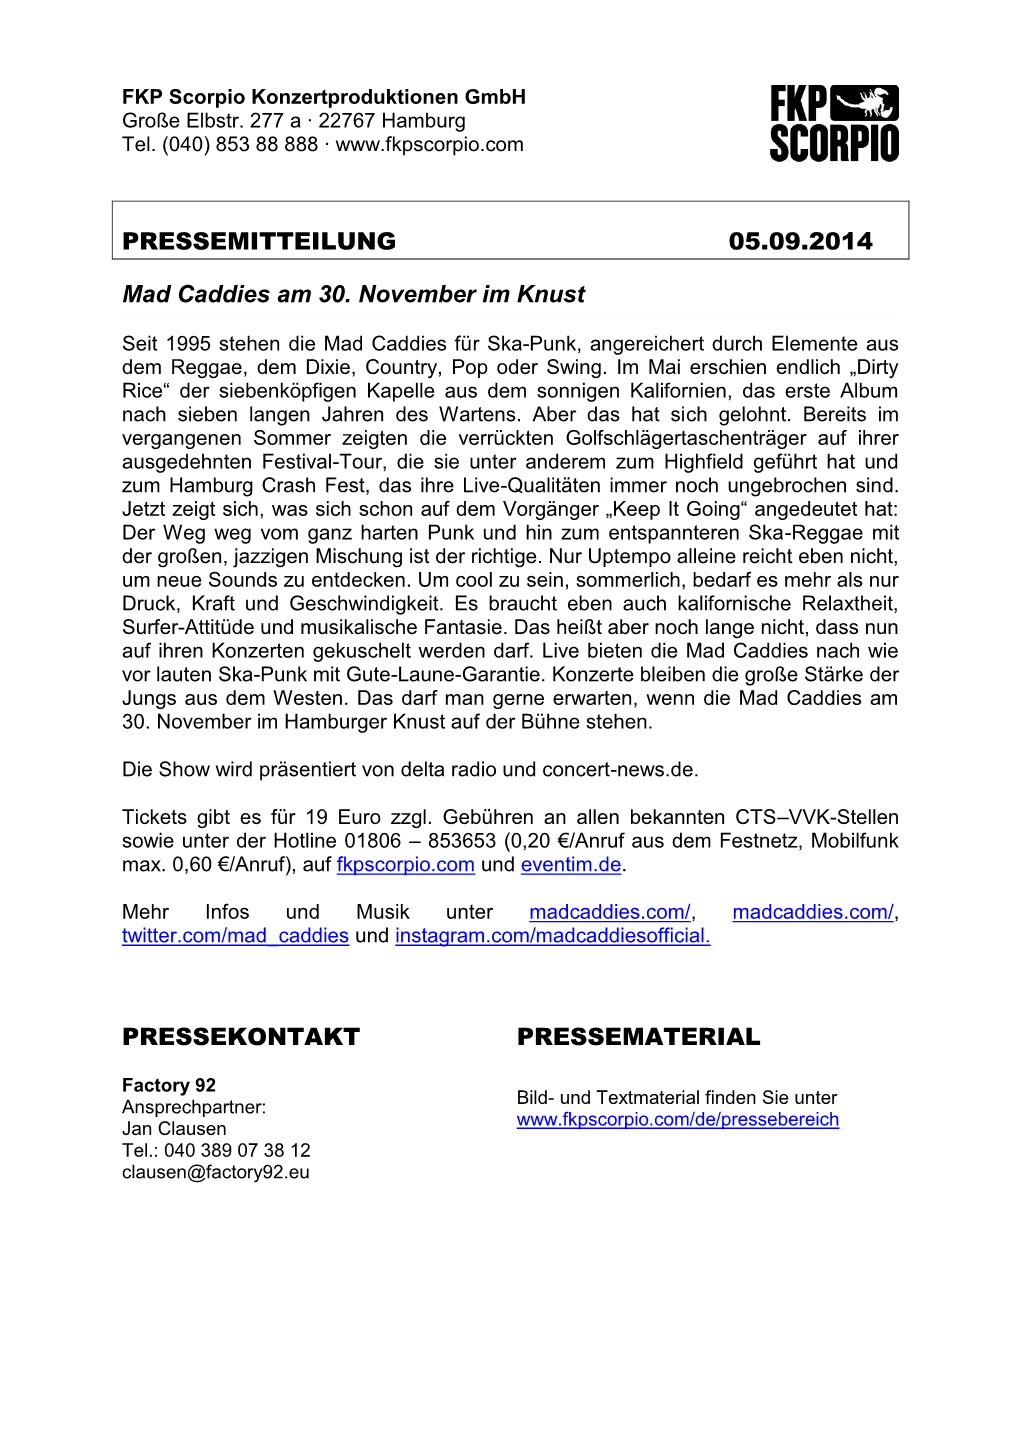 PM-MAD CADDIES-05.09.2014-PDF PRESSEMATERIAL Download